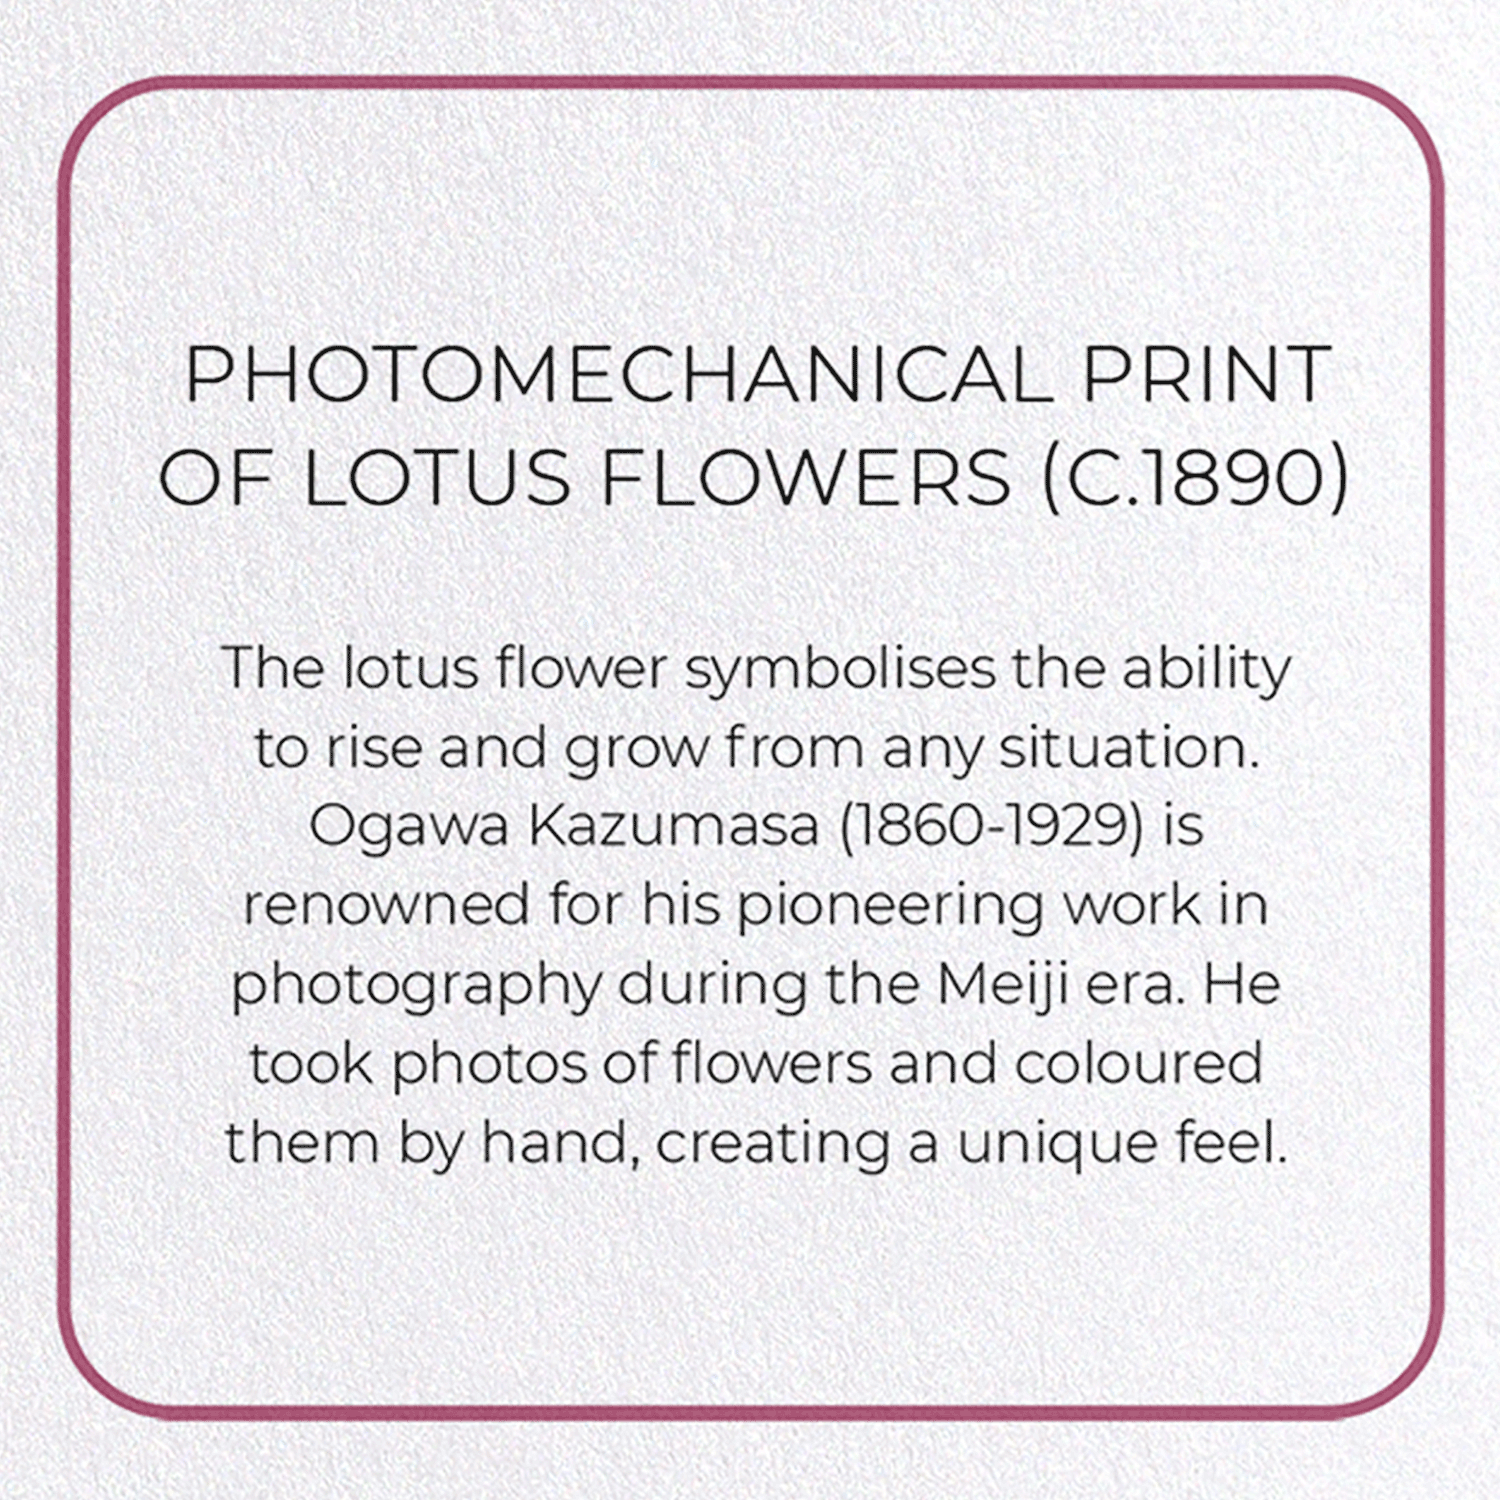 PHOTOMECHANICAL PRINT OF LOTUS FLOWERS (C.1890)